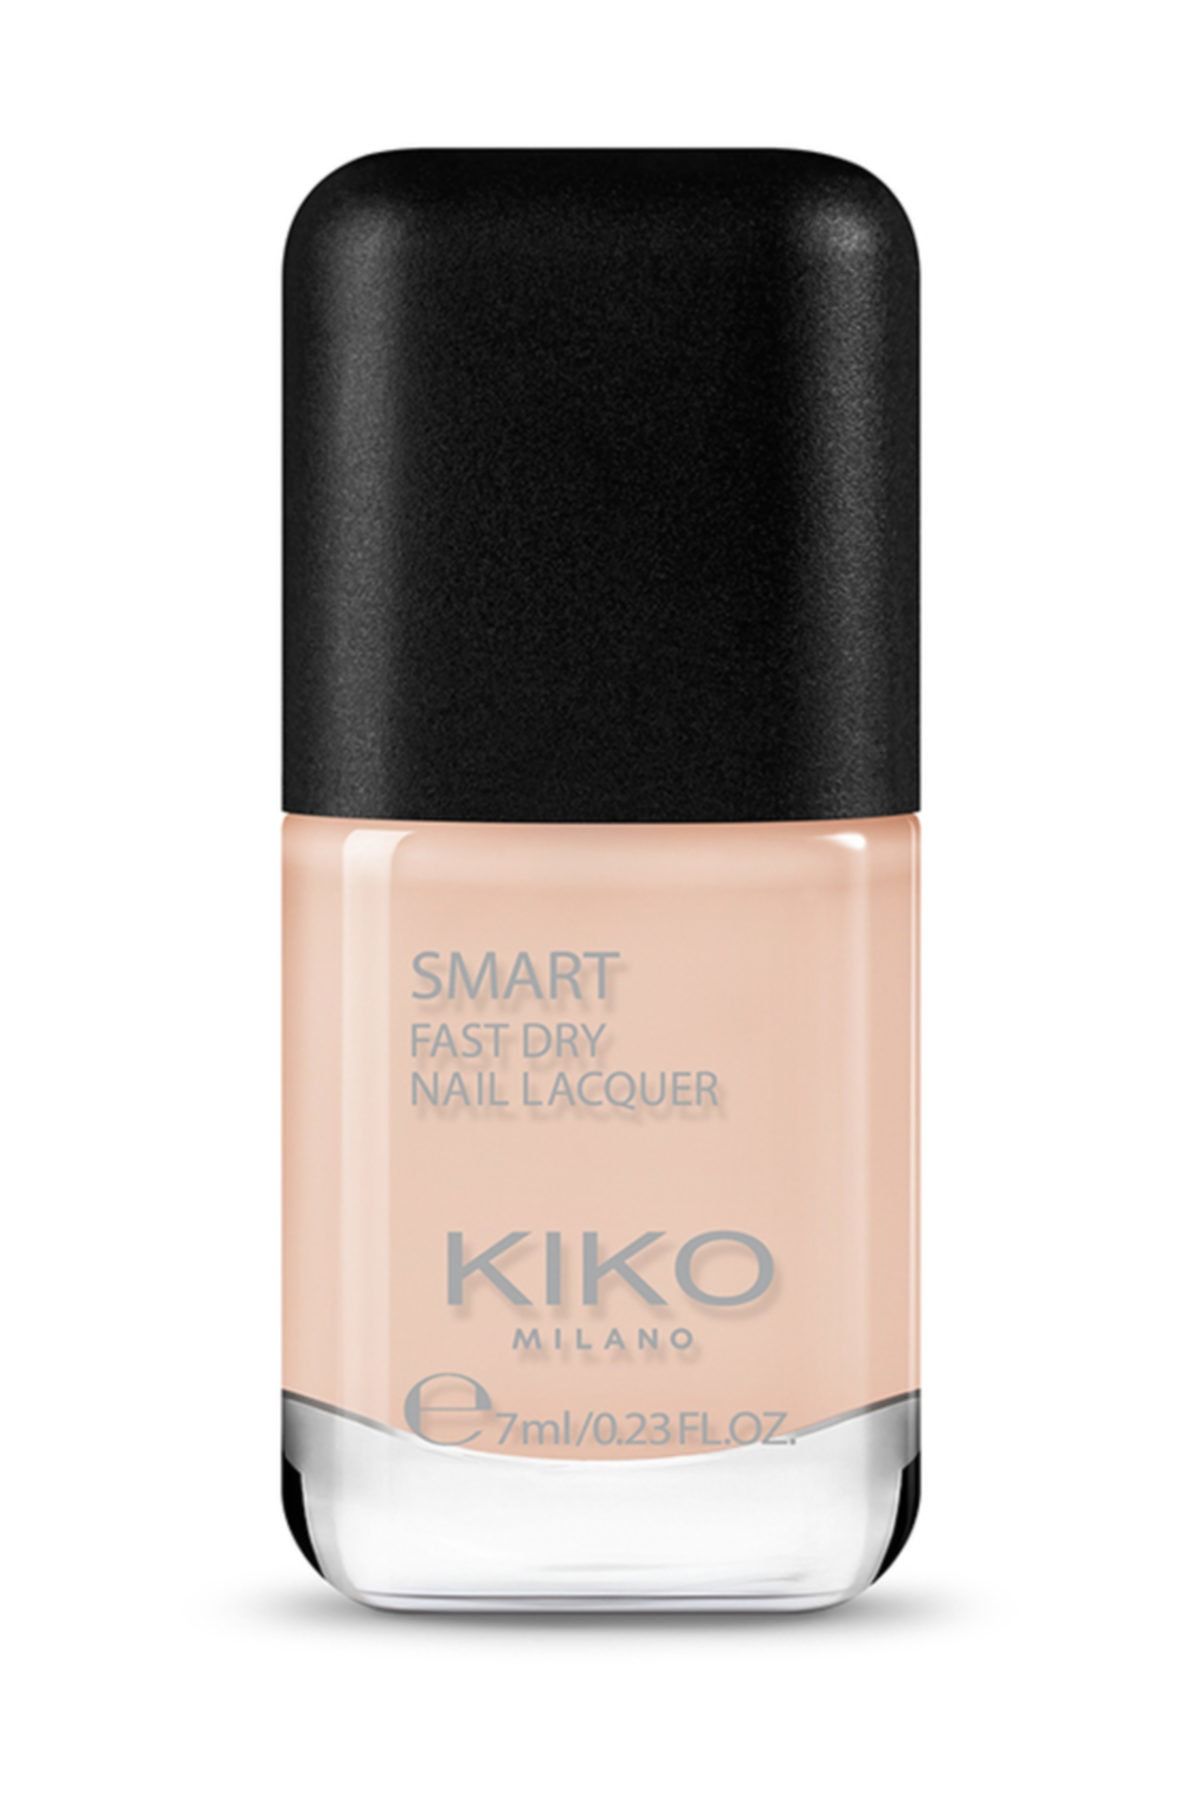 KIKO Smart Fast Dry Nail Lacquer 03 Oje Nude Beige